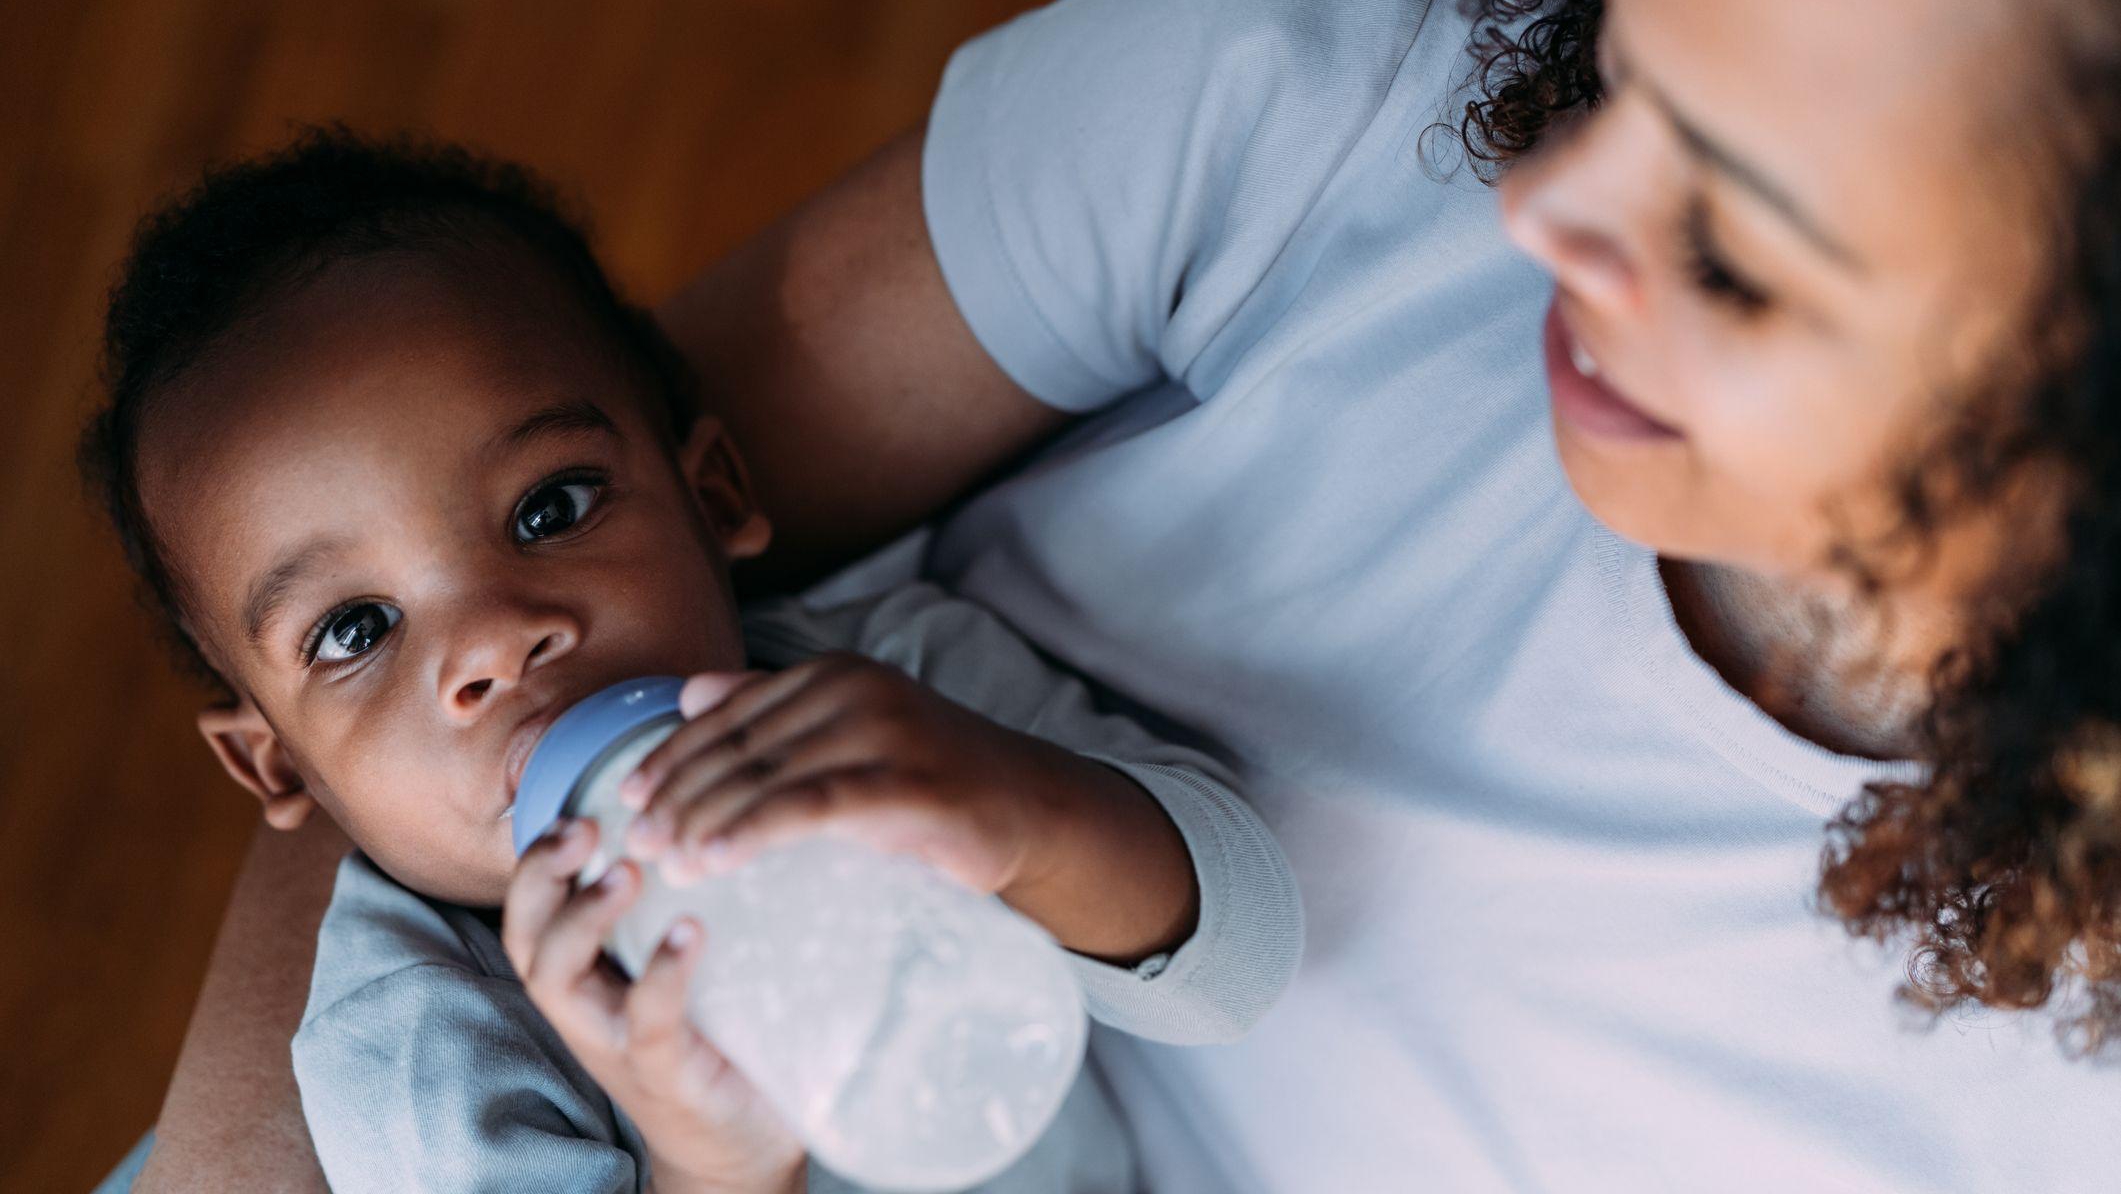 Getty Images | توصي منظمة الصحة العالمية الأمهات بإرضاع أطفالهن فقط بالرضاعة الطبيعية خلال الأشهر الستة الأولى إن أمكن